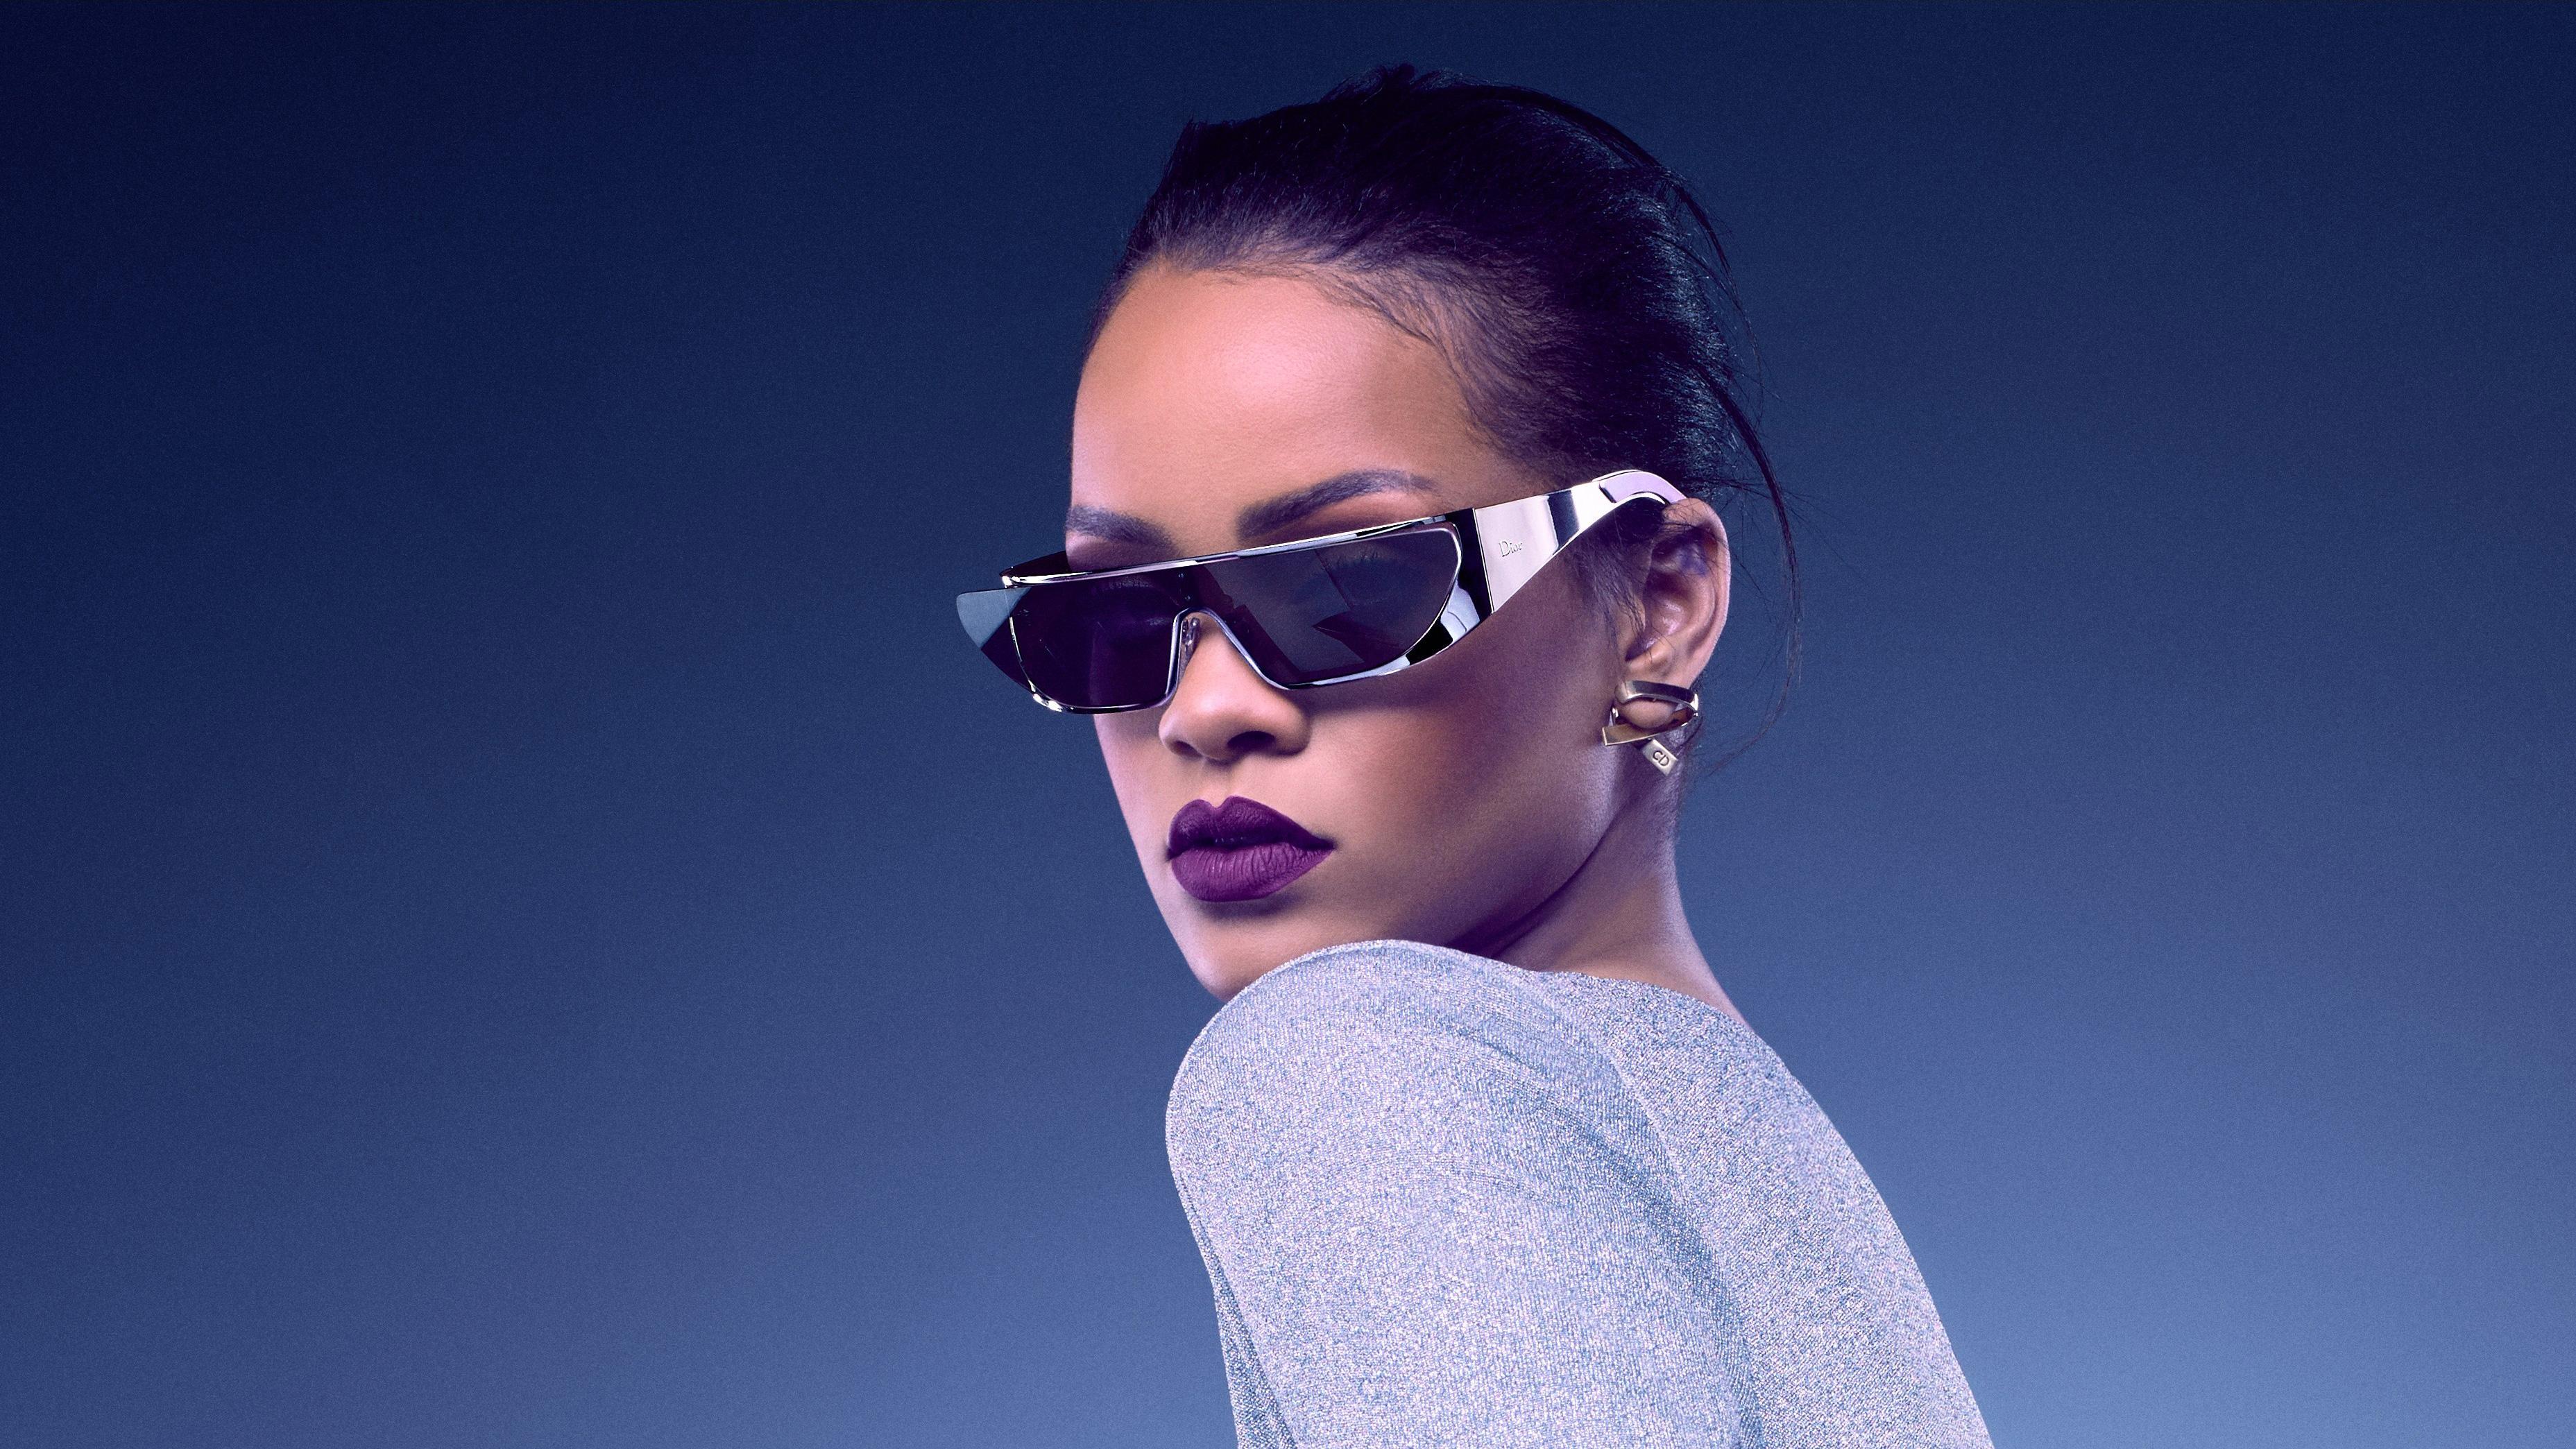 Rihanna Dior, HD Celebrities, 4k Wallpaper, Image, Background